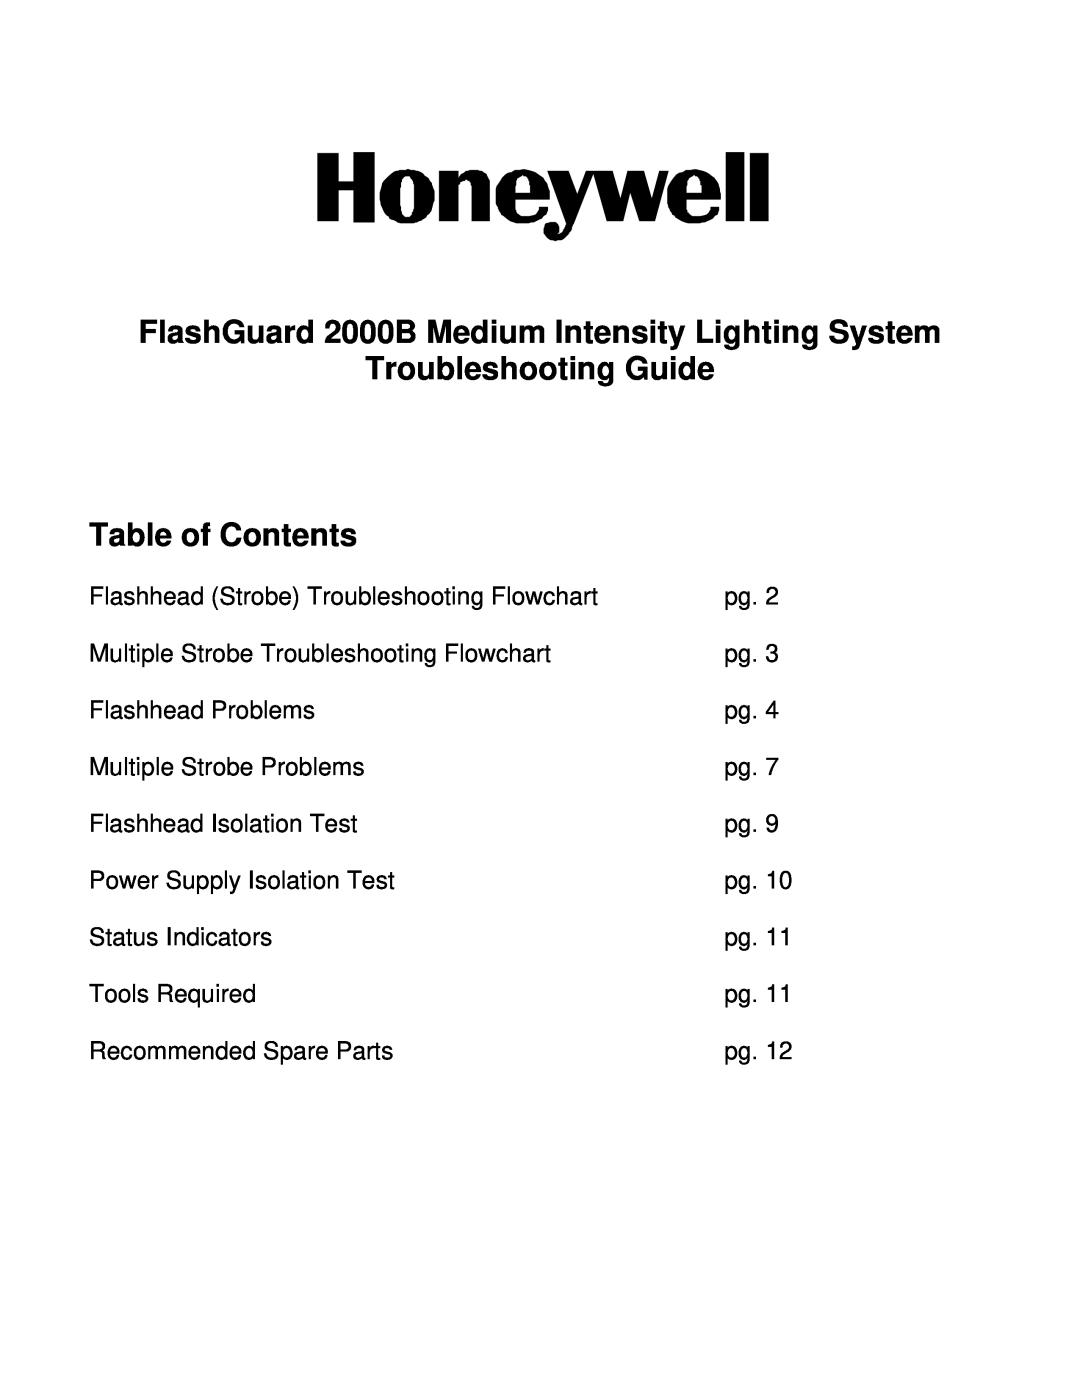 Honeywell manual FlashGuard 2000B Medium Intensity Lighting System, Troubleshooting Guide Table of Contents 